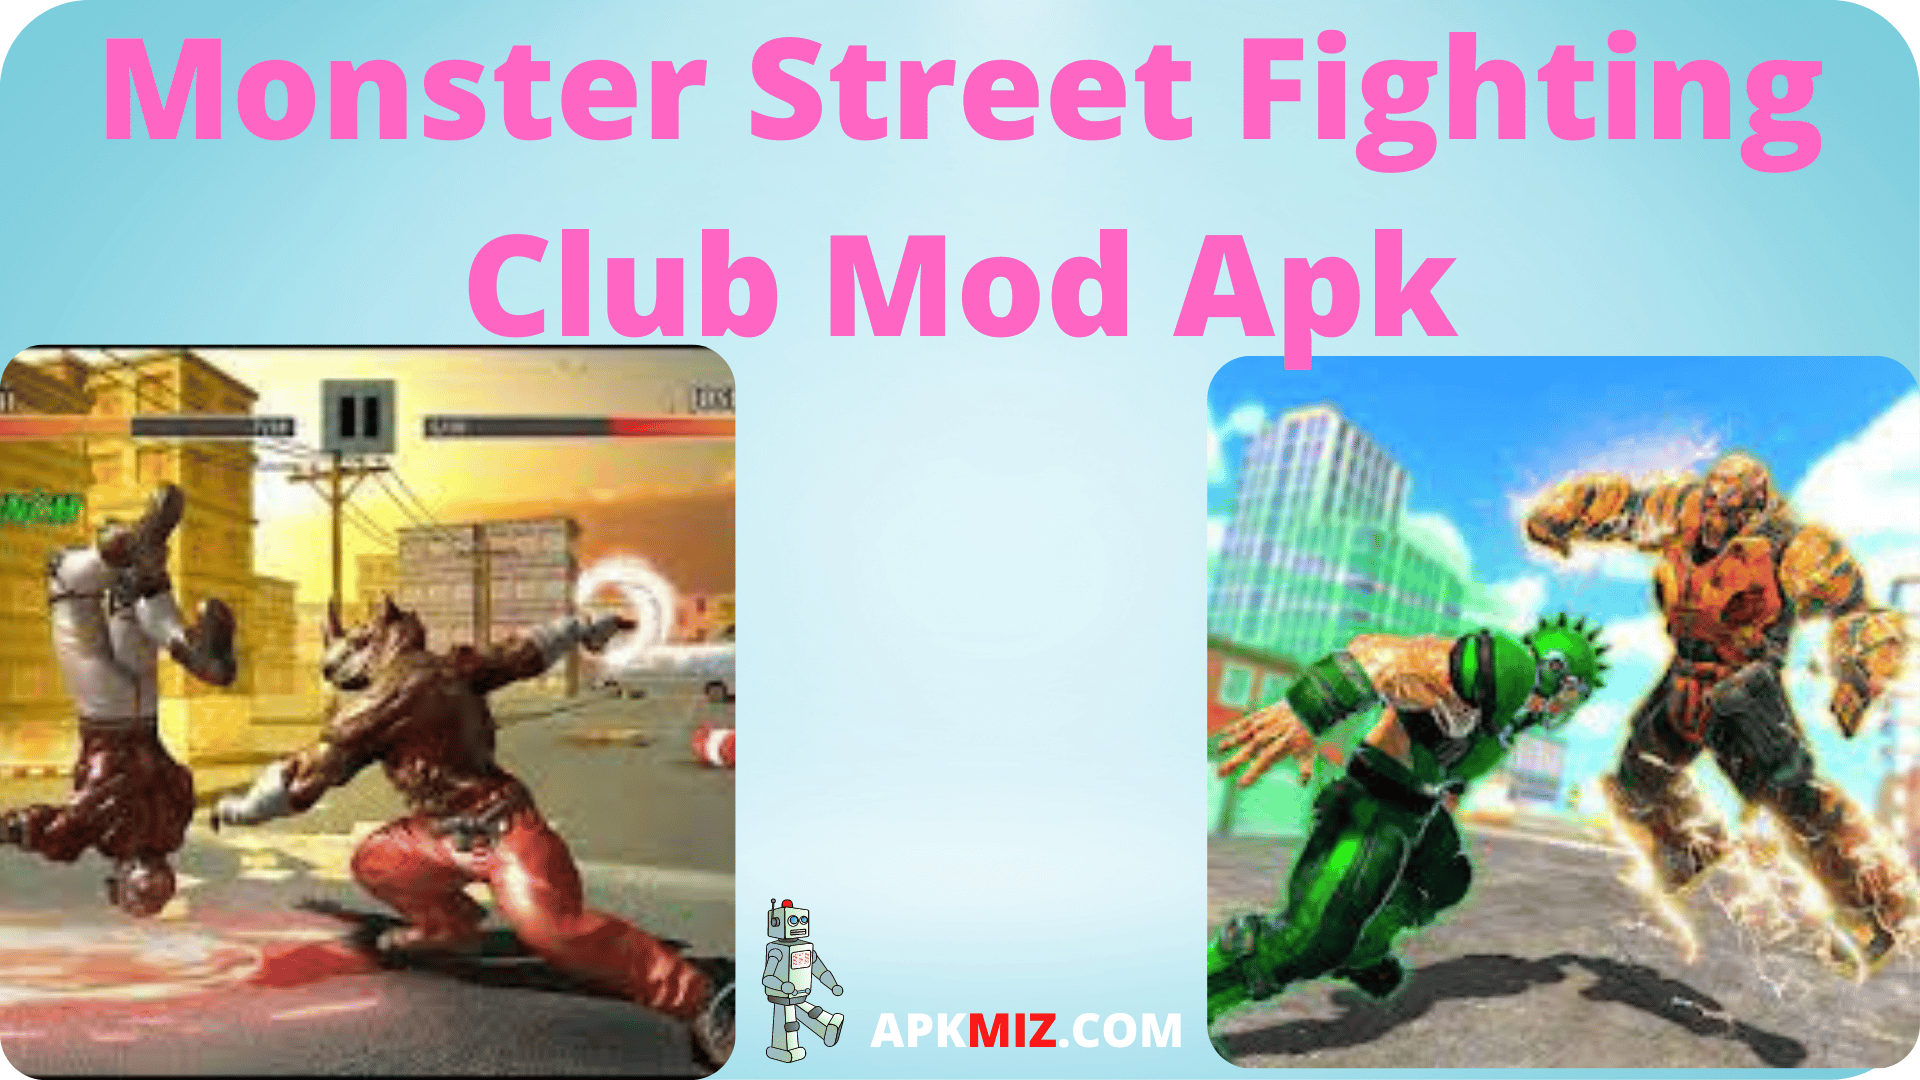 Monster Street Fighting Club Mod Apk